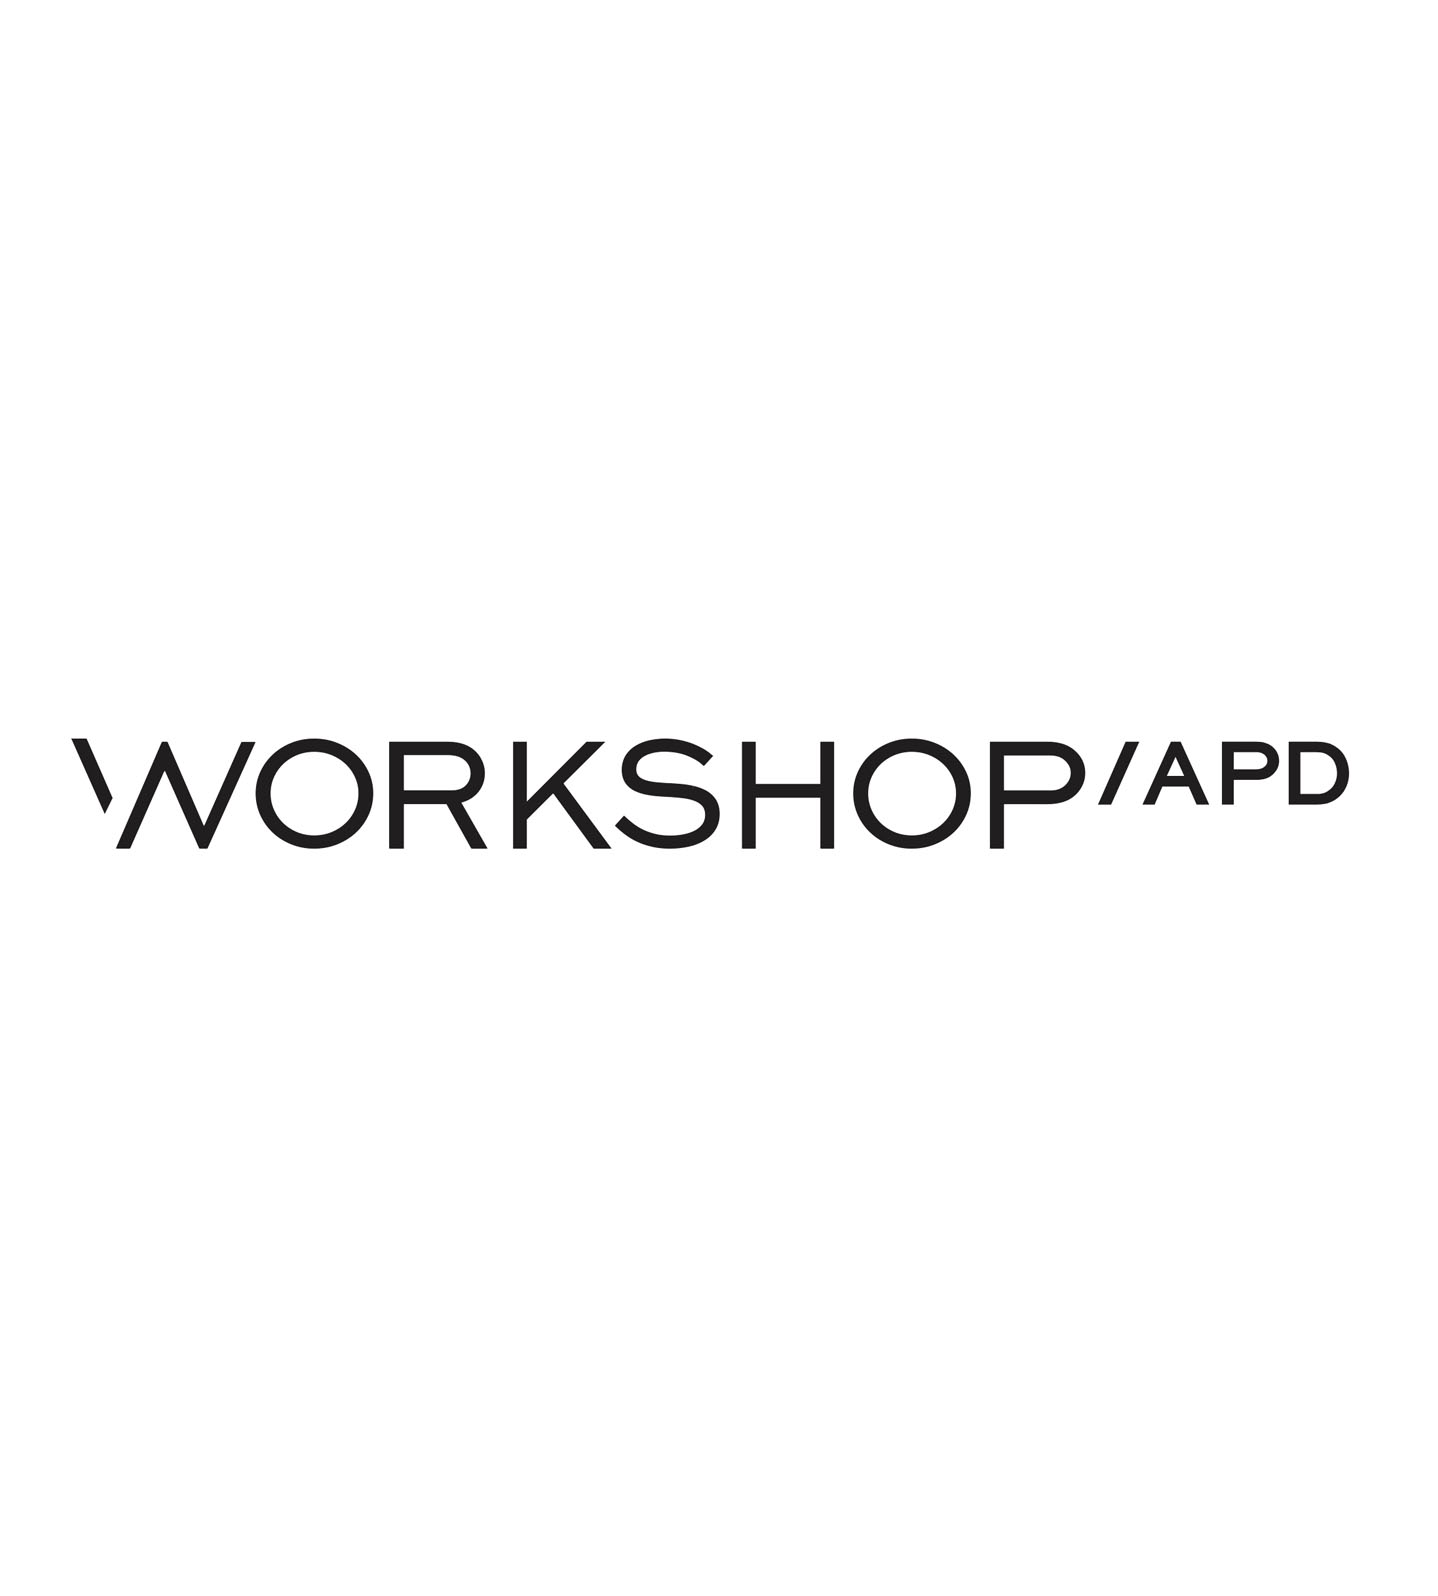 WORKSHOP/APD